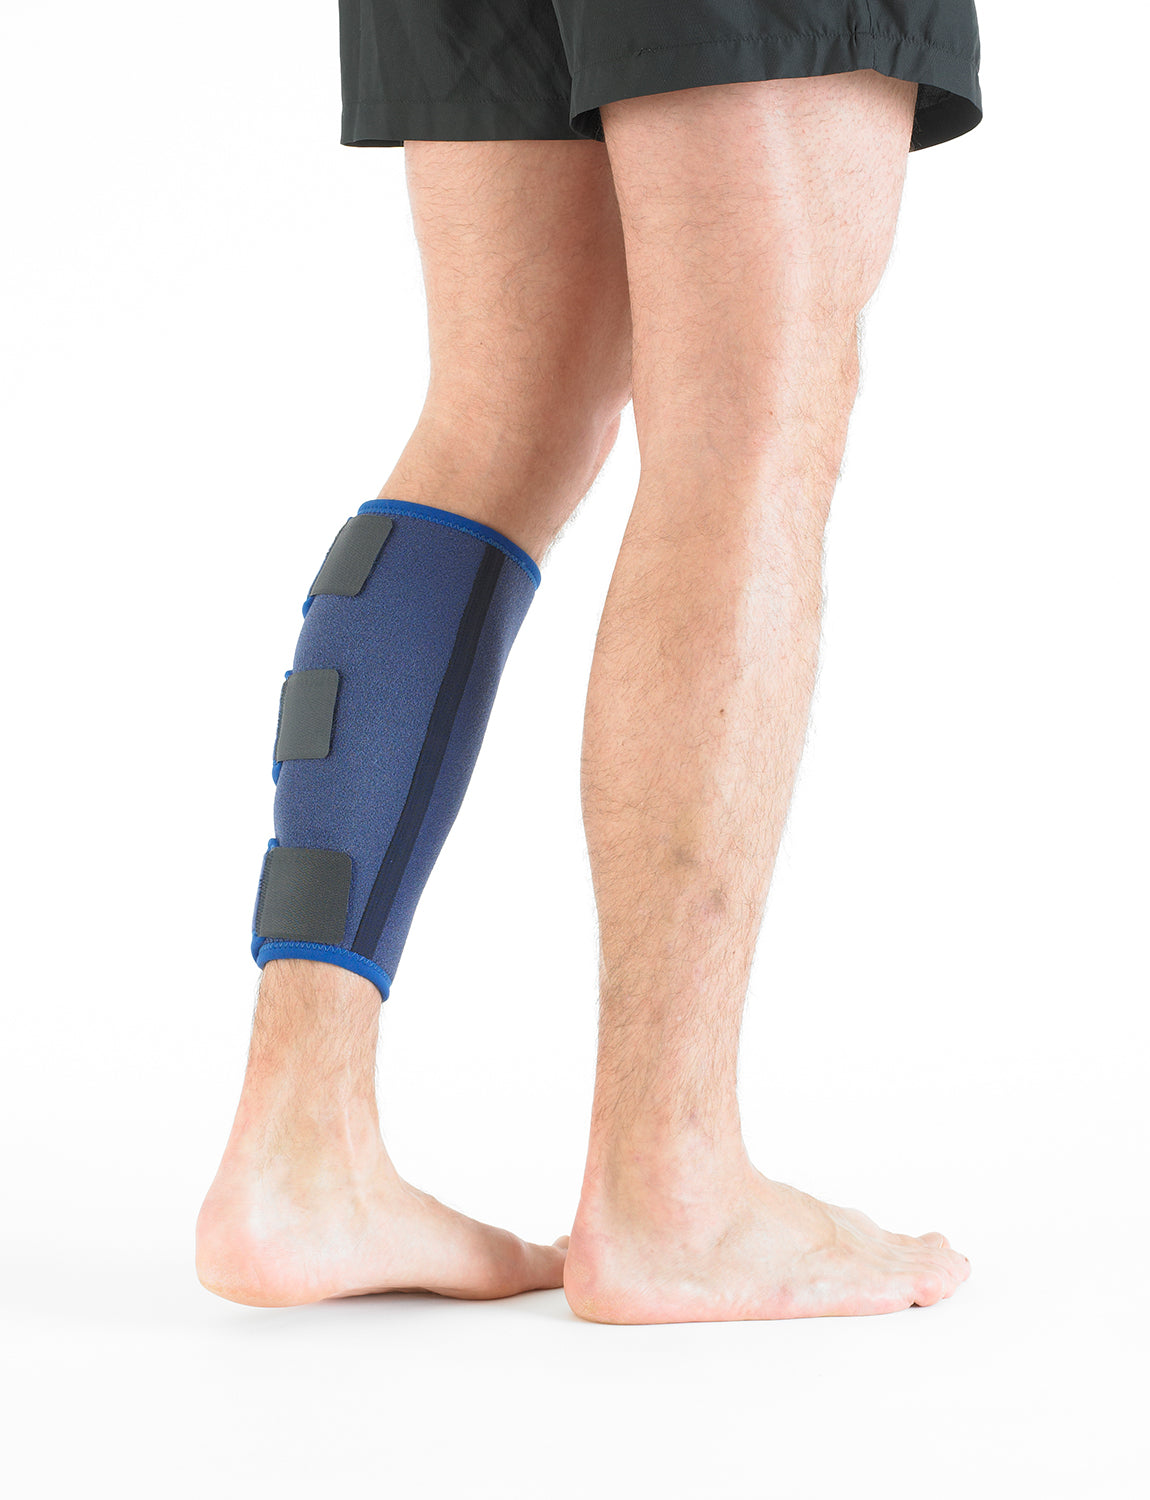 Calf Support Adjustable Brace Shin Splints Varicose Veins Running